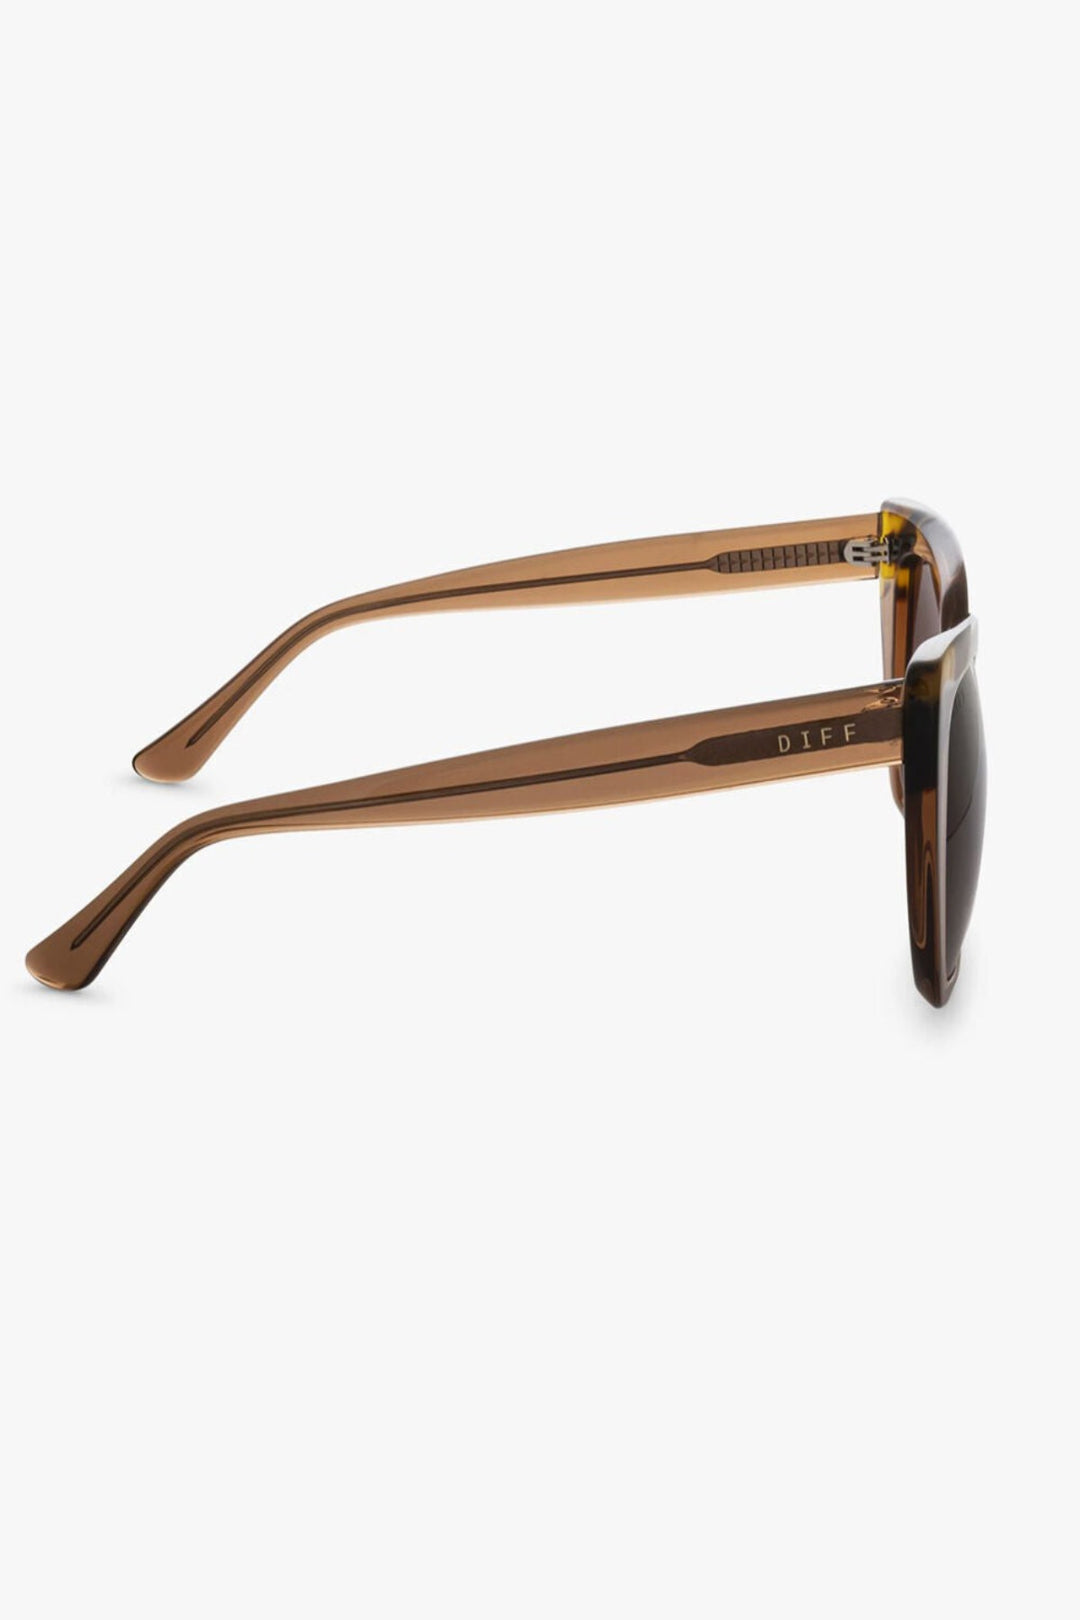 Diff Eyewear Lizzy Dunes Crystal + Brown Gradient Sunglasses